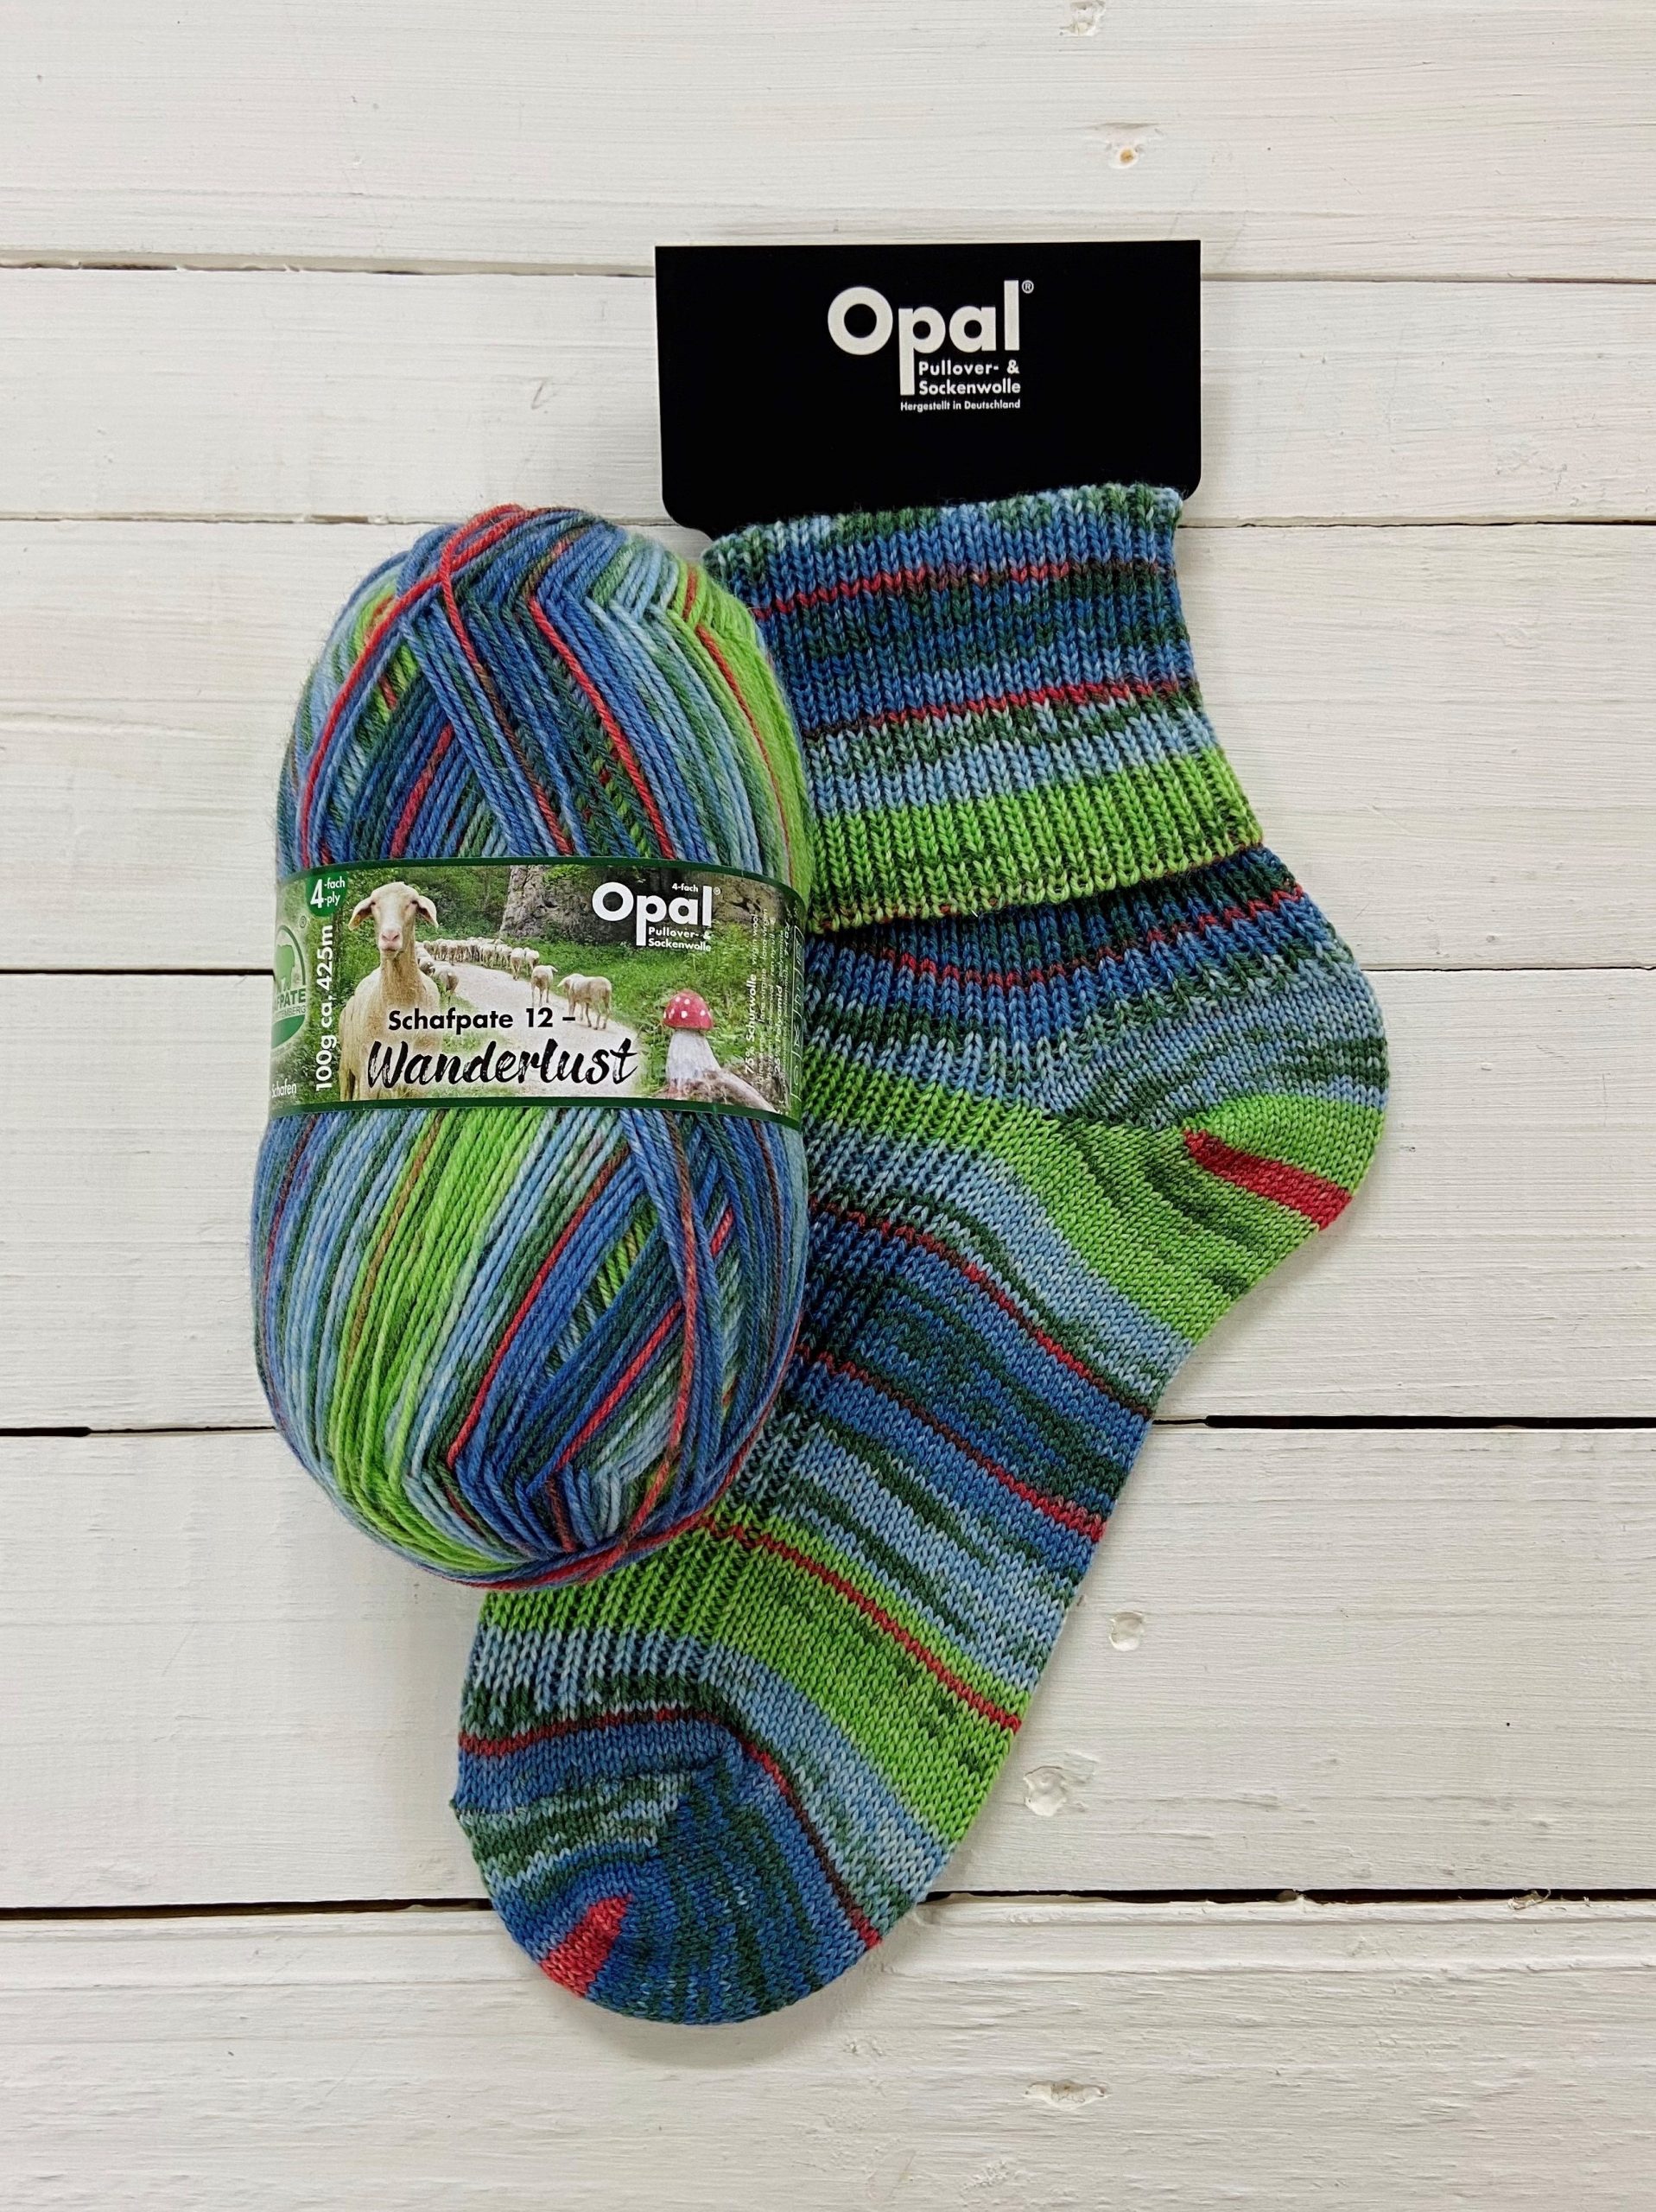 Opal Schafpate 12 Sock Yarn